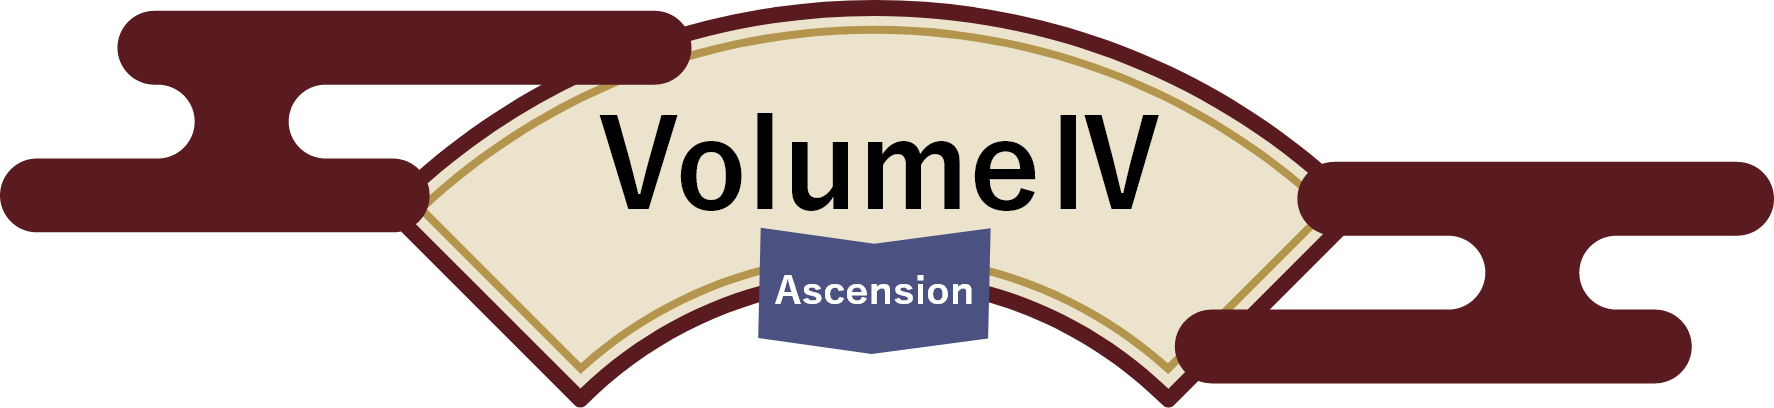 Volume Ⅳ Ascension